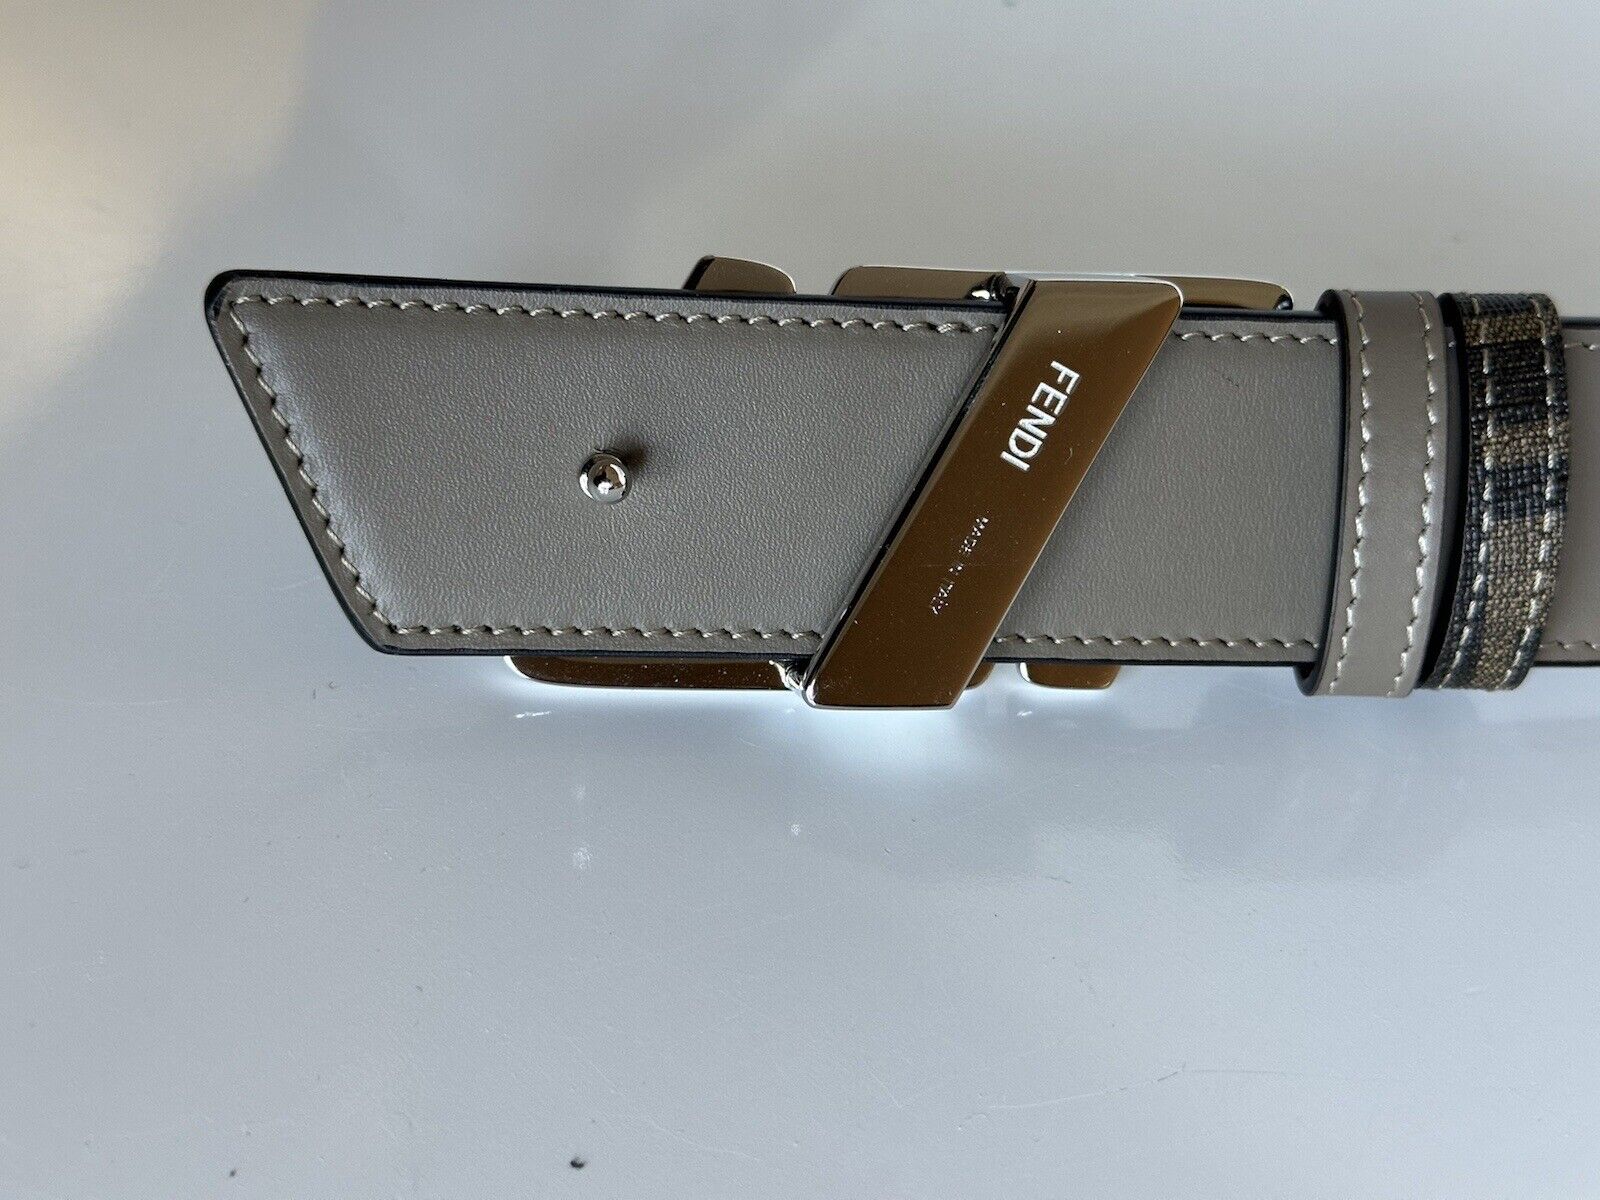 NIB $620 Fendi FF Faster Leather Black&Brown Reversible Belt 105/42 7C0486 Italy